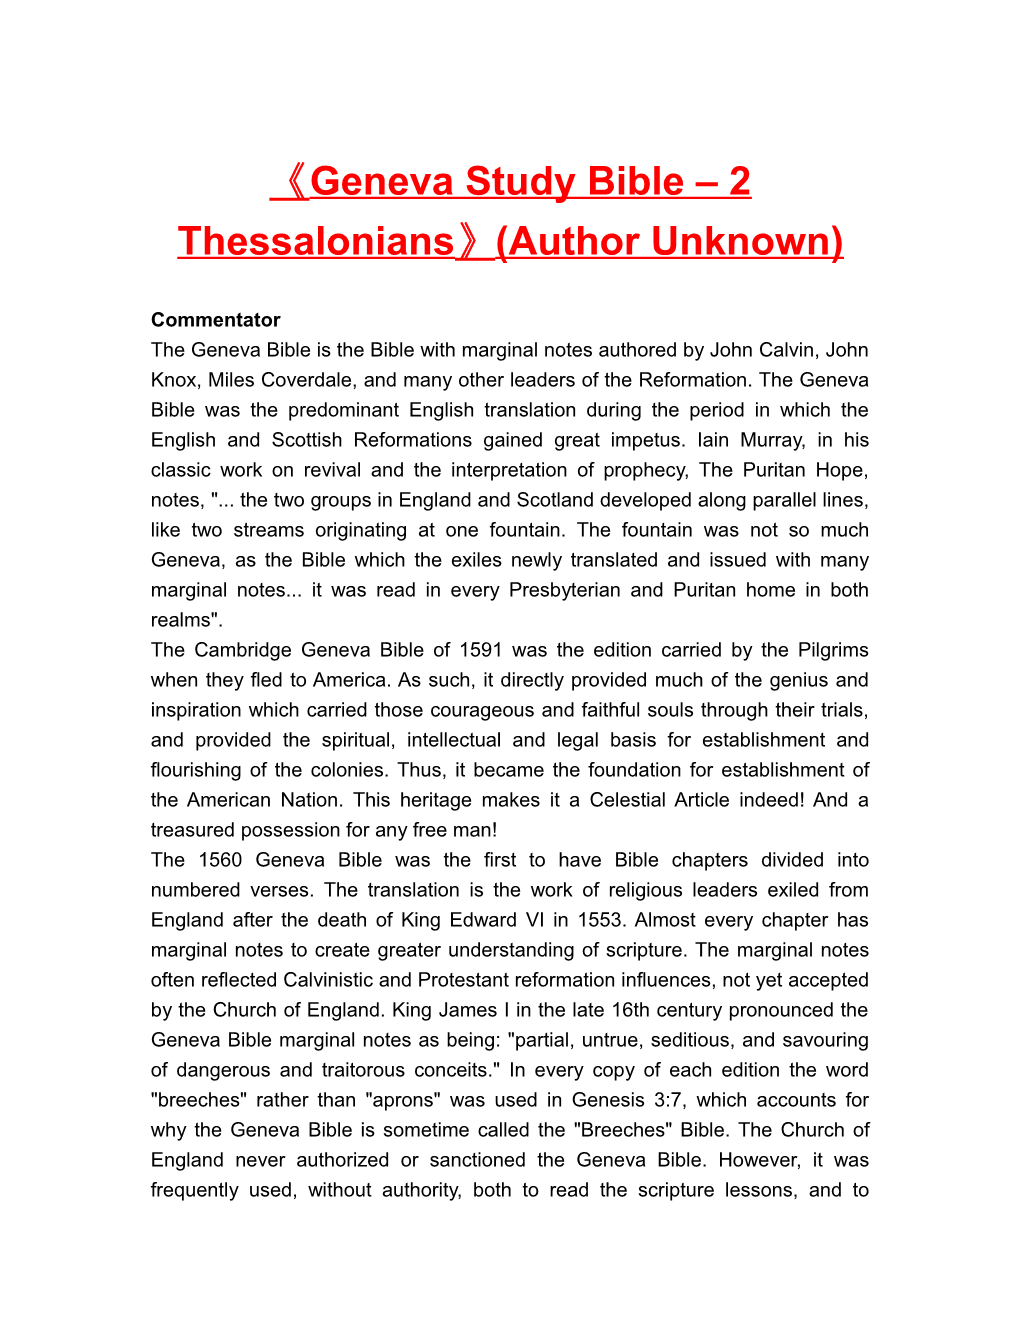 Geneva Study Bible 2 Thessalonians (Author Unknown)